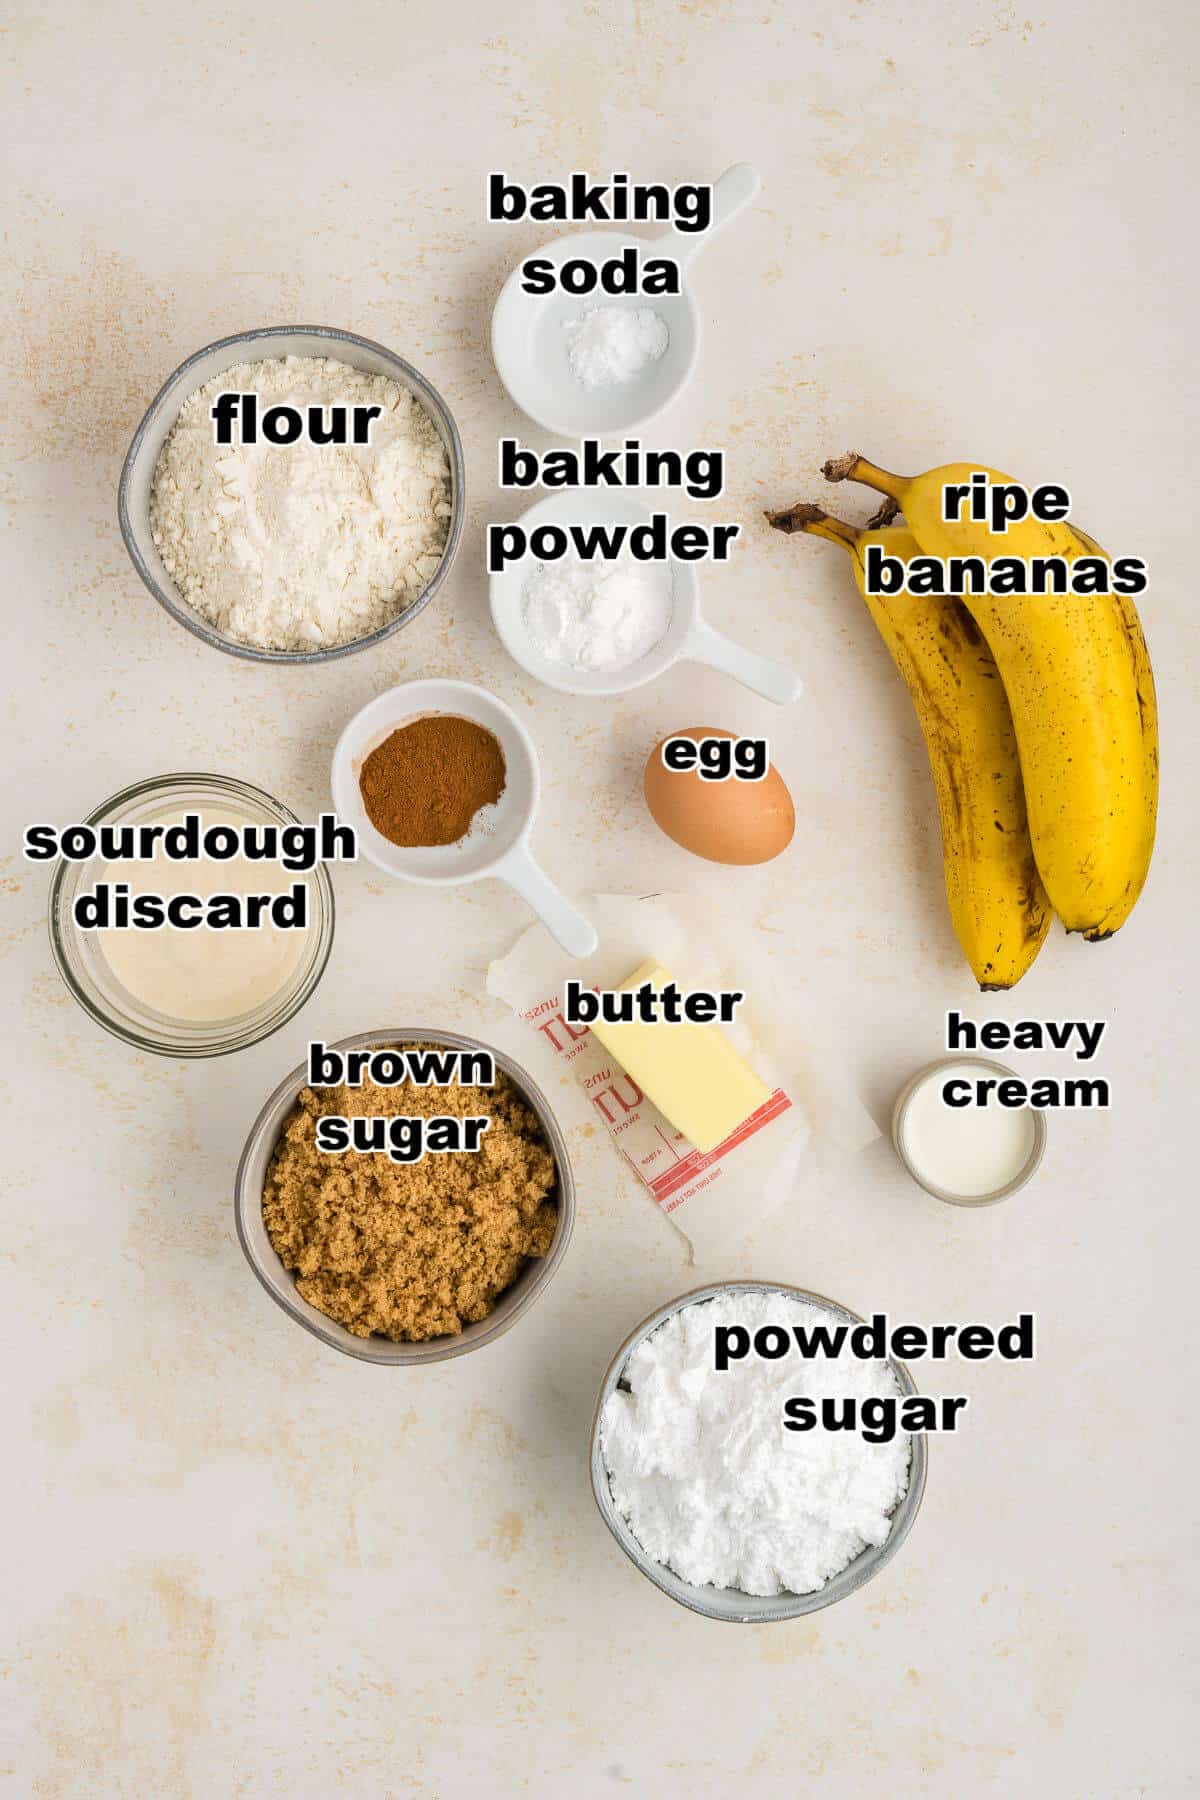 Ingredients to make sourdough discard banana bread.